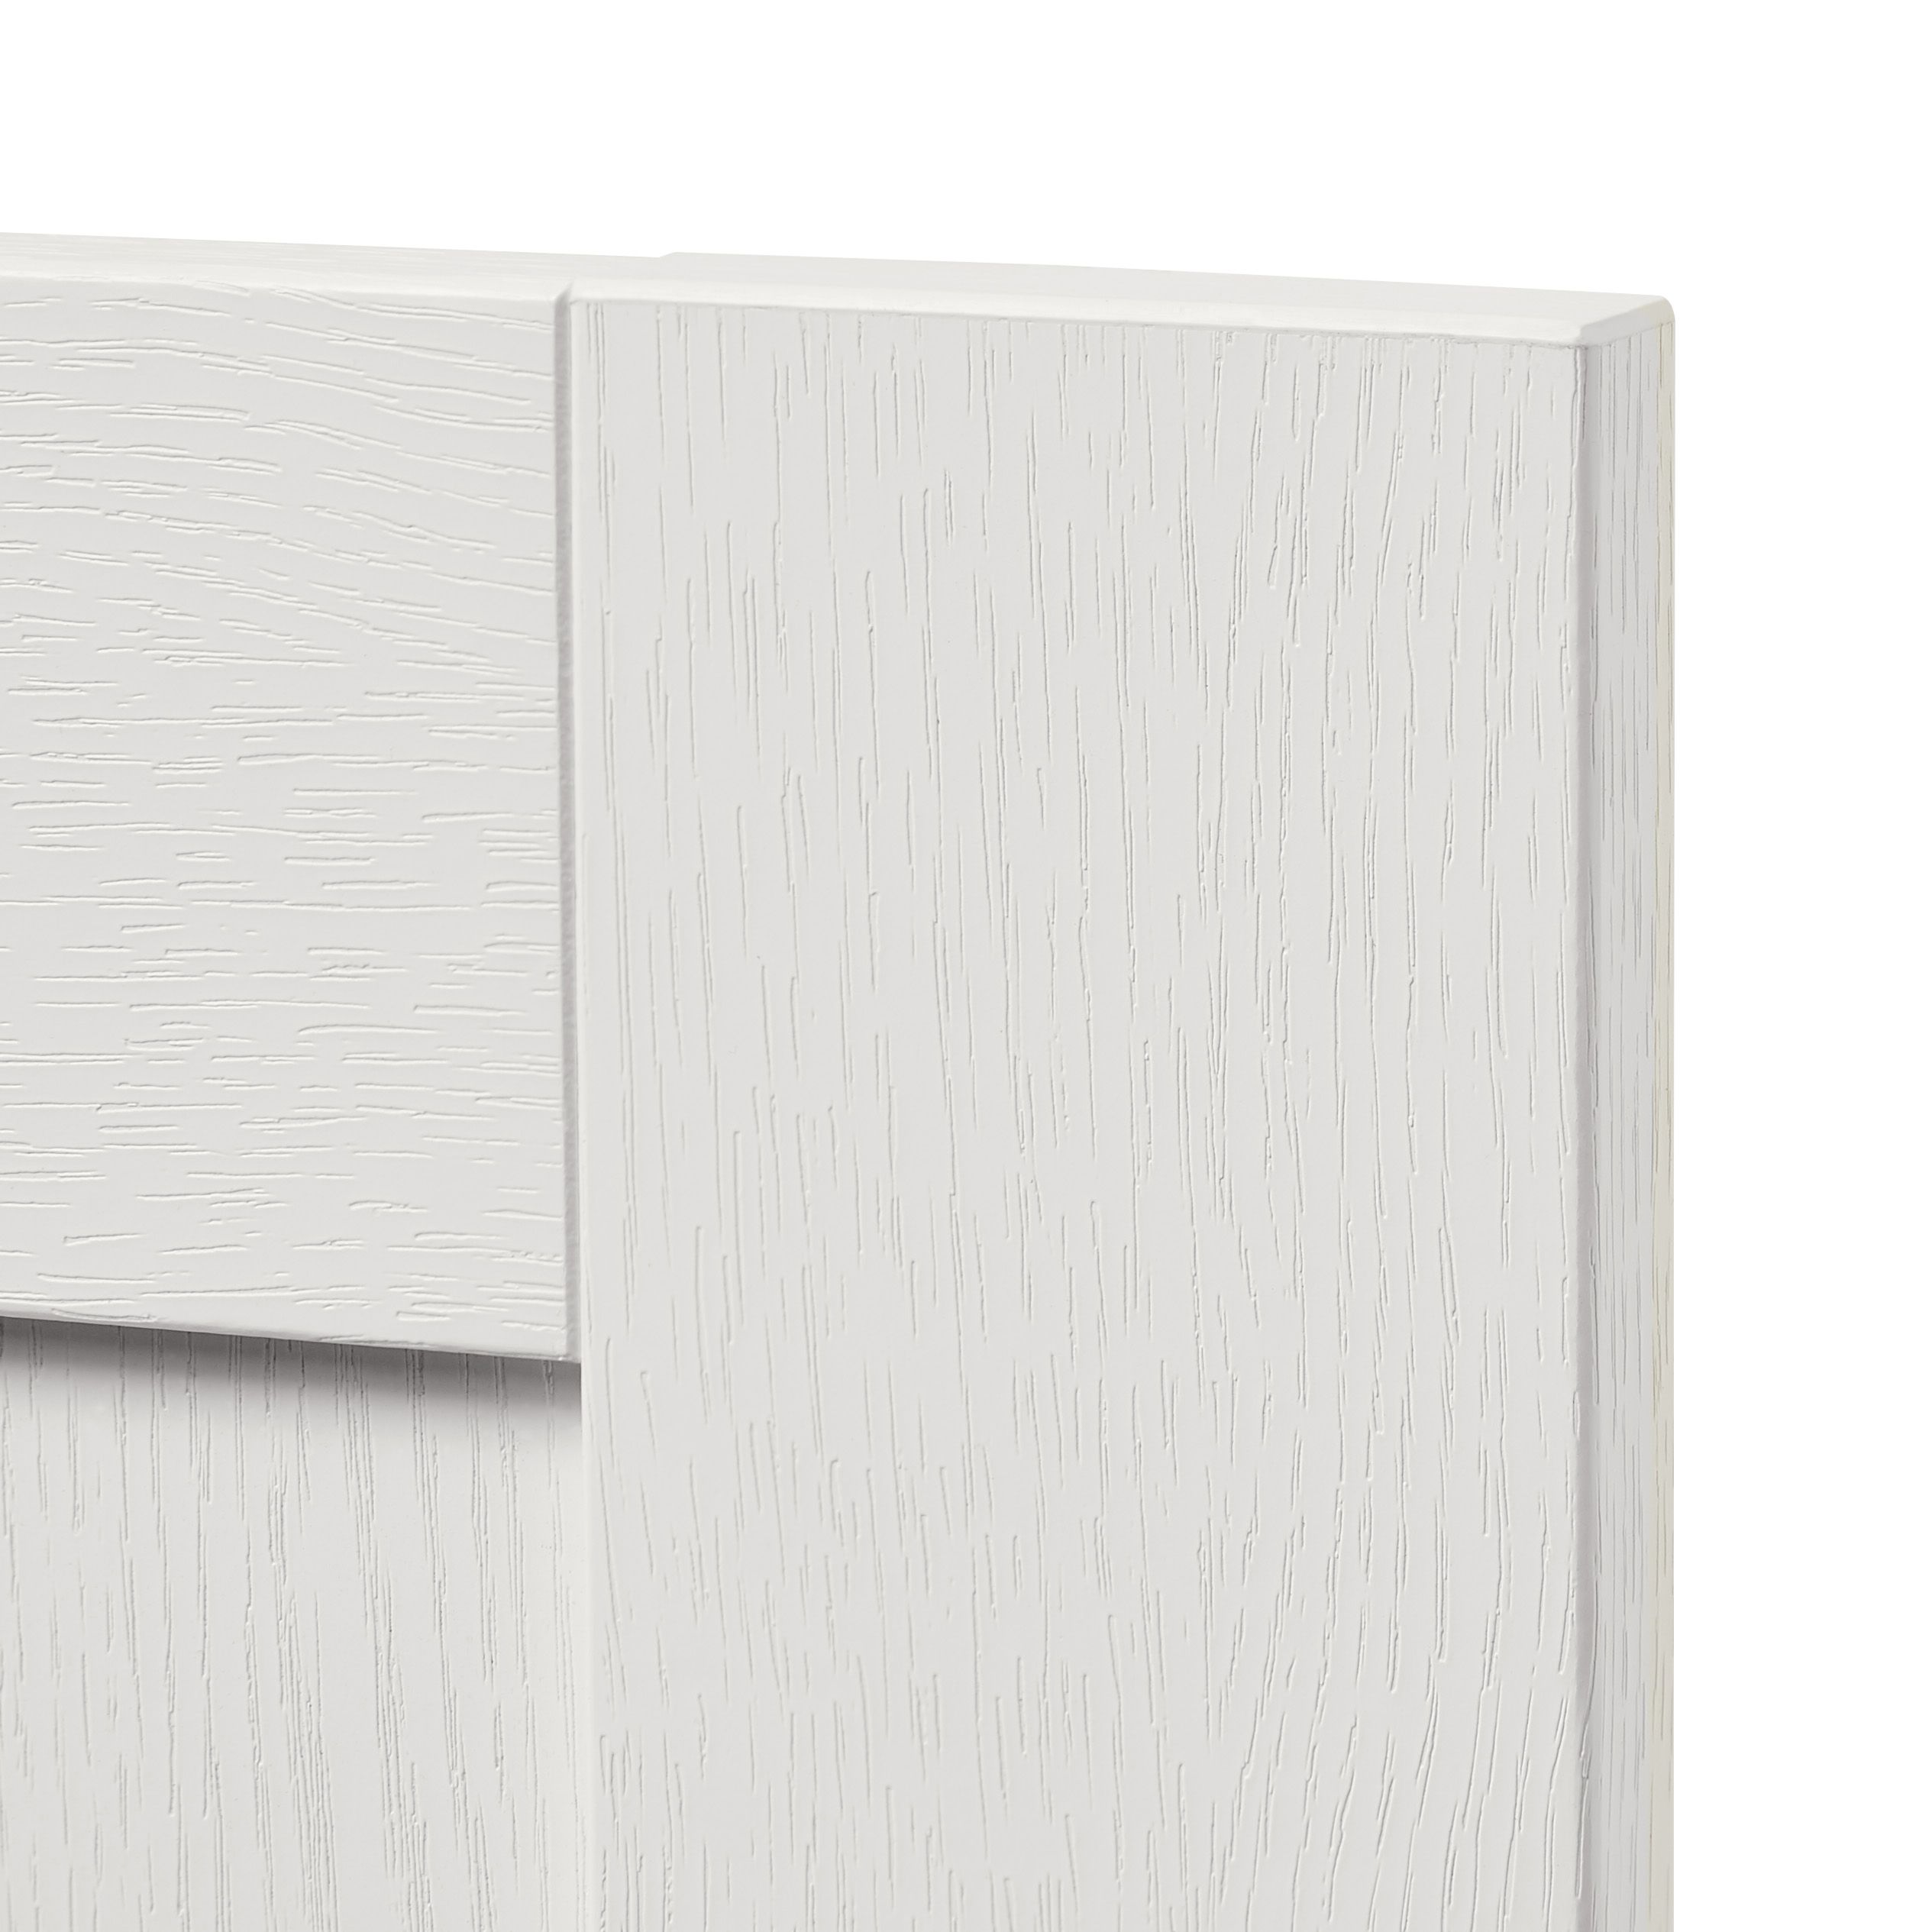 GoodHome Alpinia Matt ivory painted wood effect shaker Highline Cabinet door (W)250mm (H)715mm (T)18mm